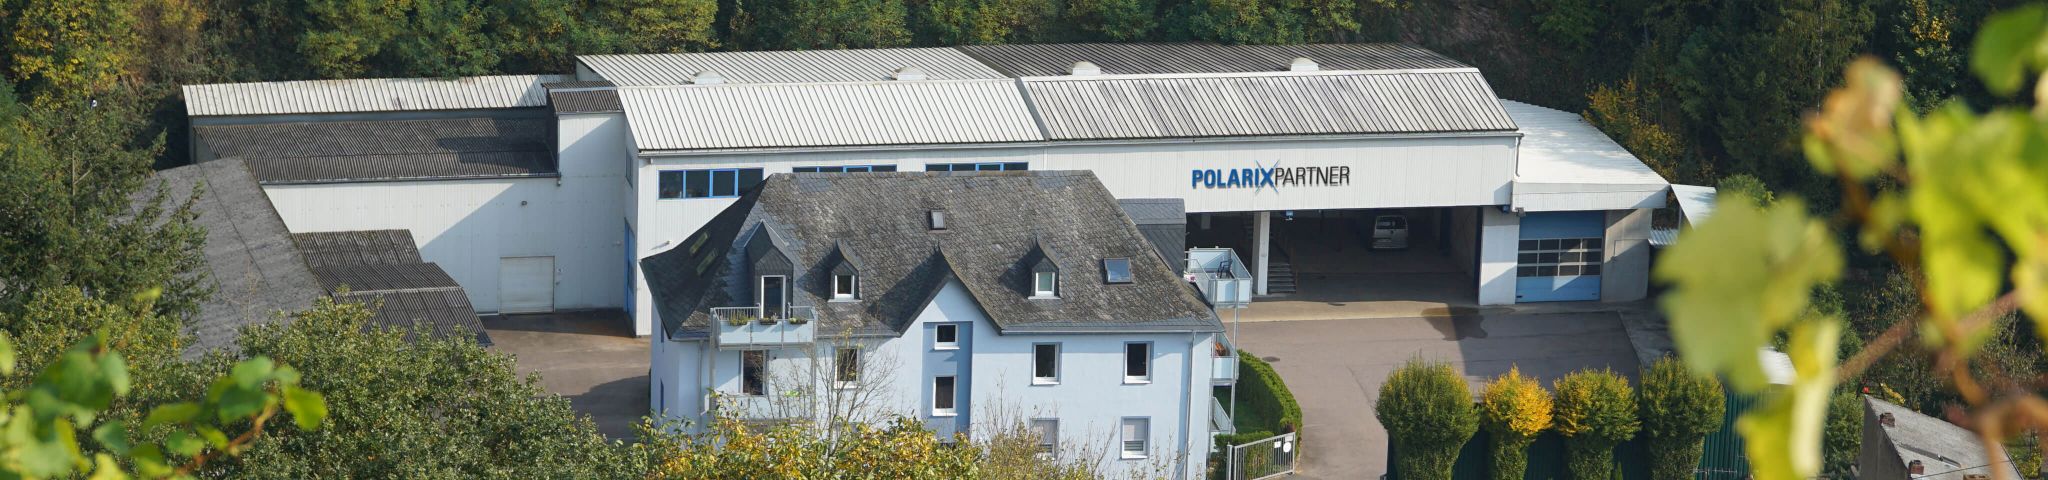 Polarixpartner Benchmark-Center